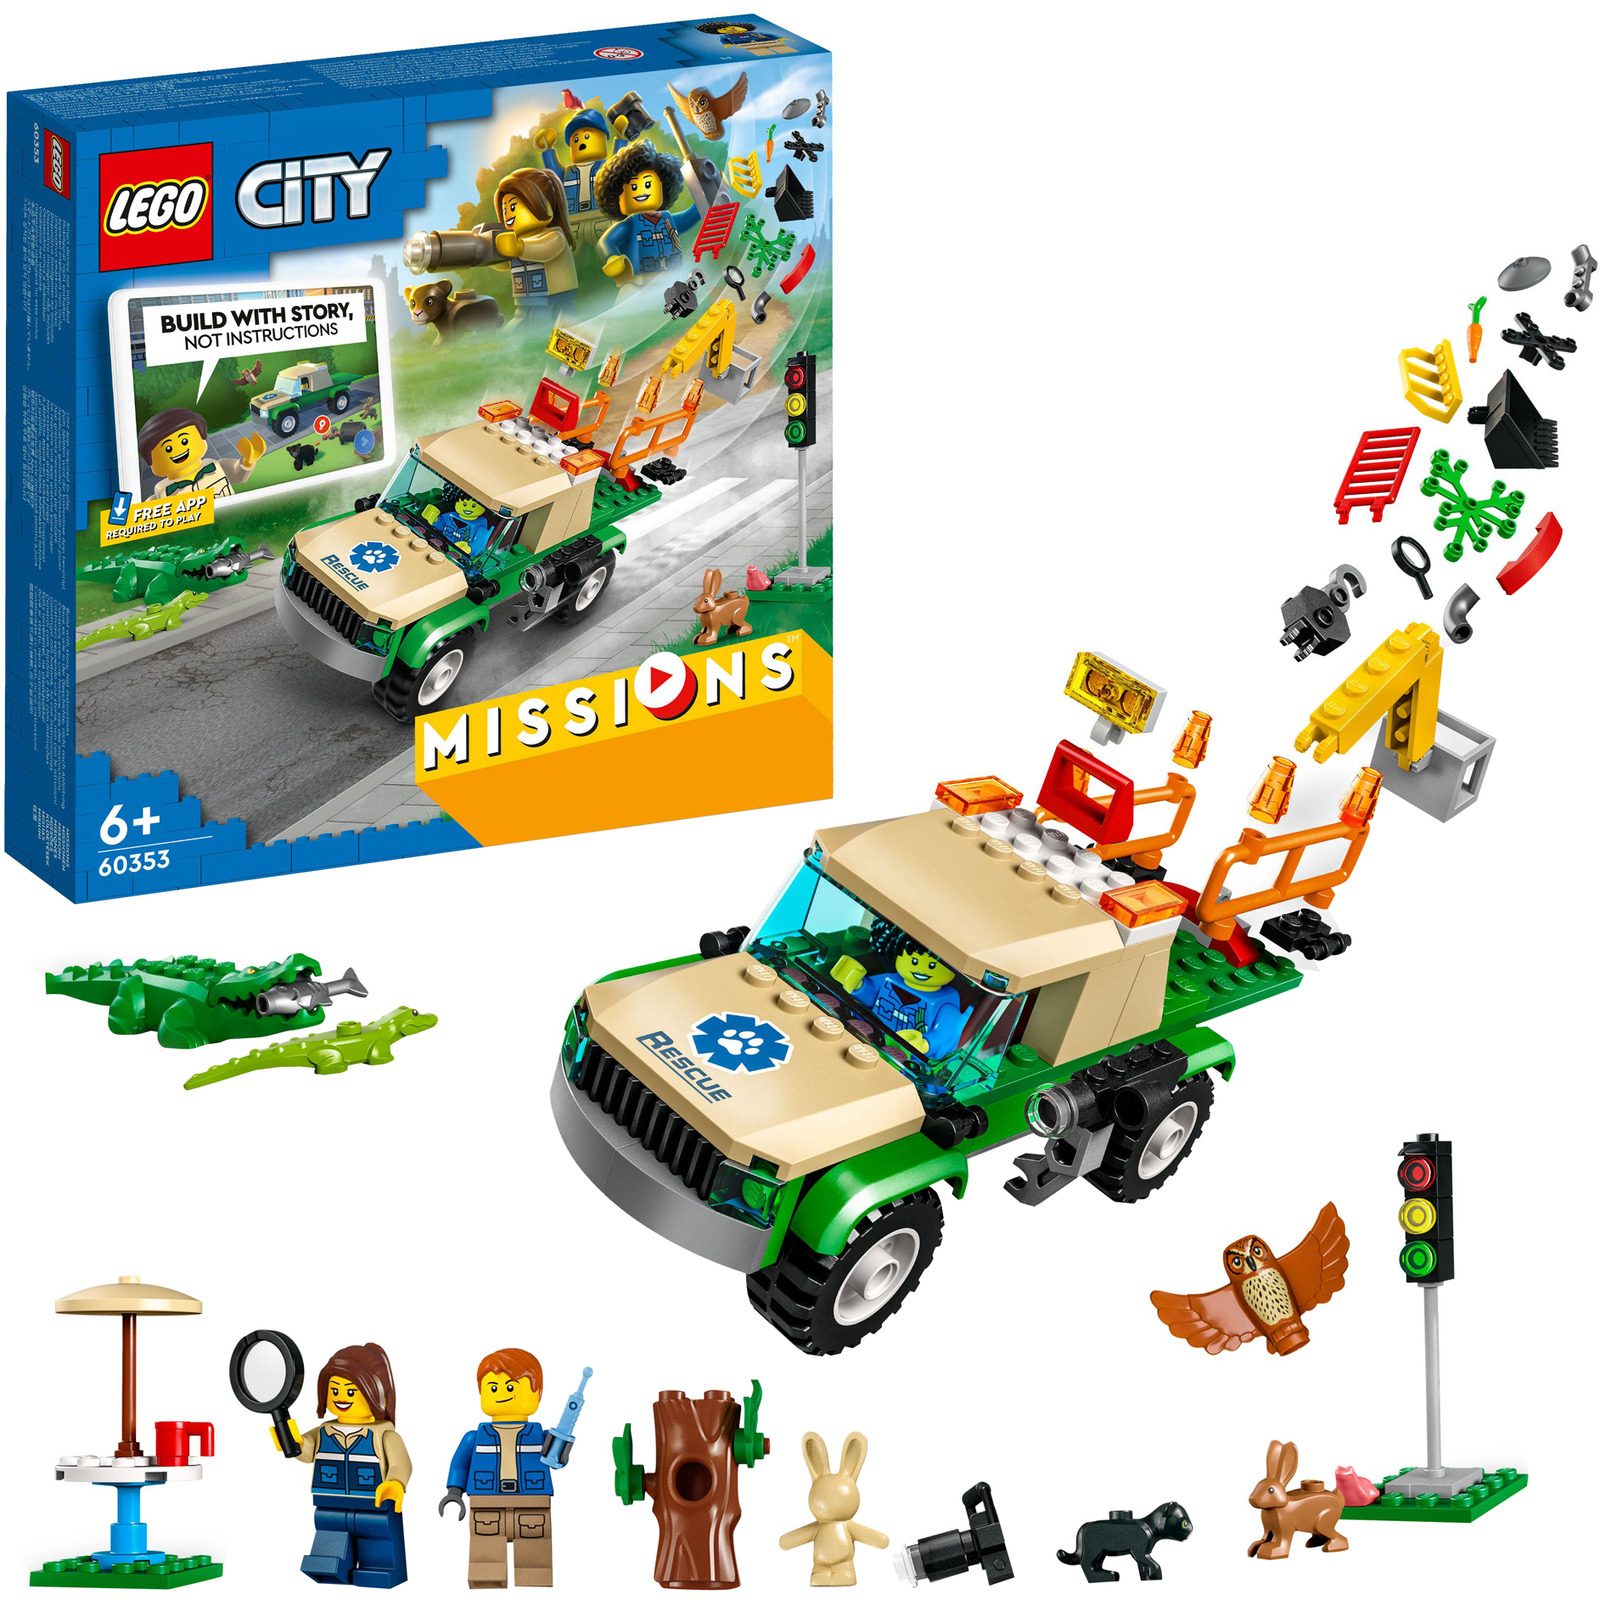 LEGO City 60353 Wildlife rescue missions LEGO konstruktors